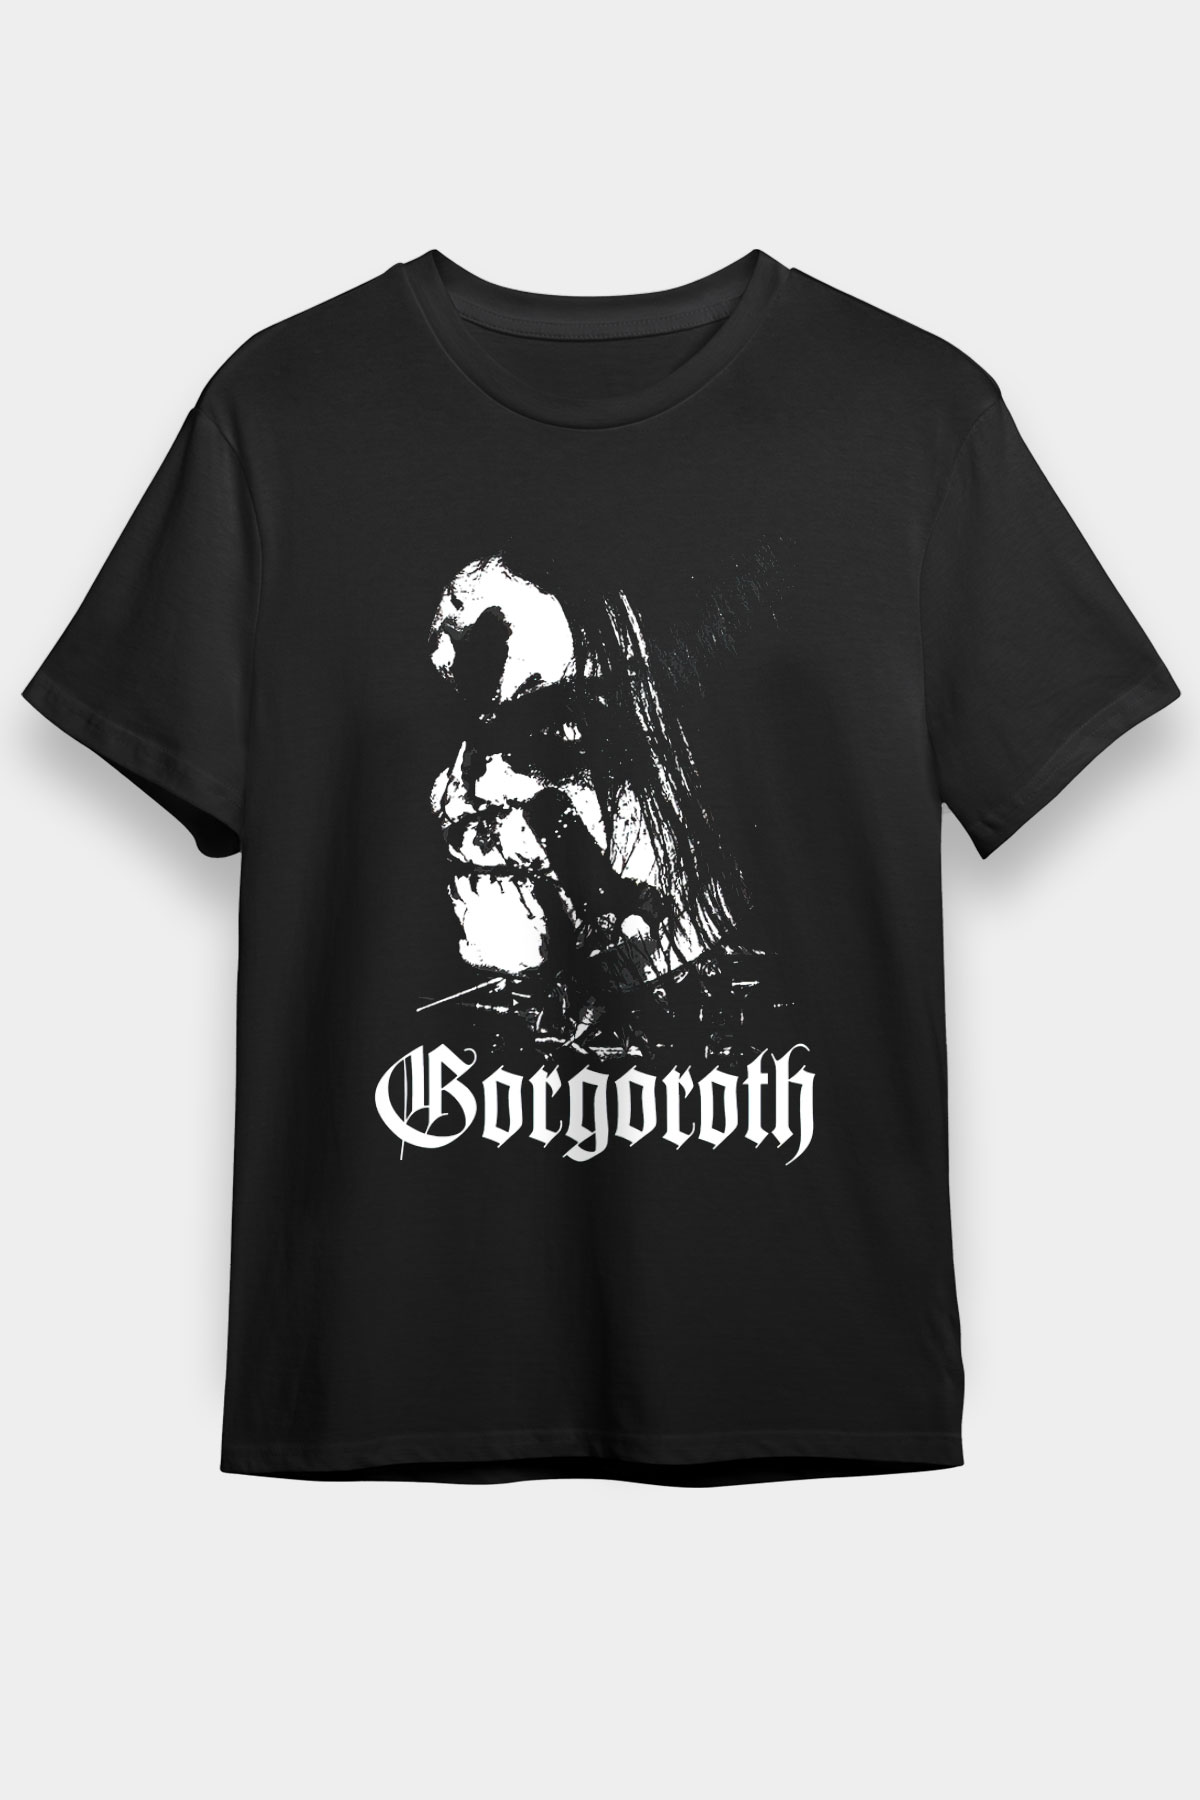 Gorgoroth Black Unisex T-Shirt - Tees - Shirts